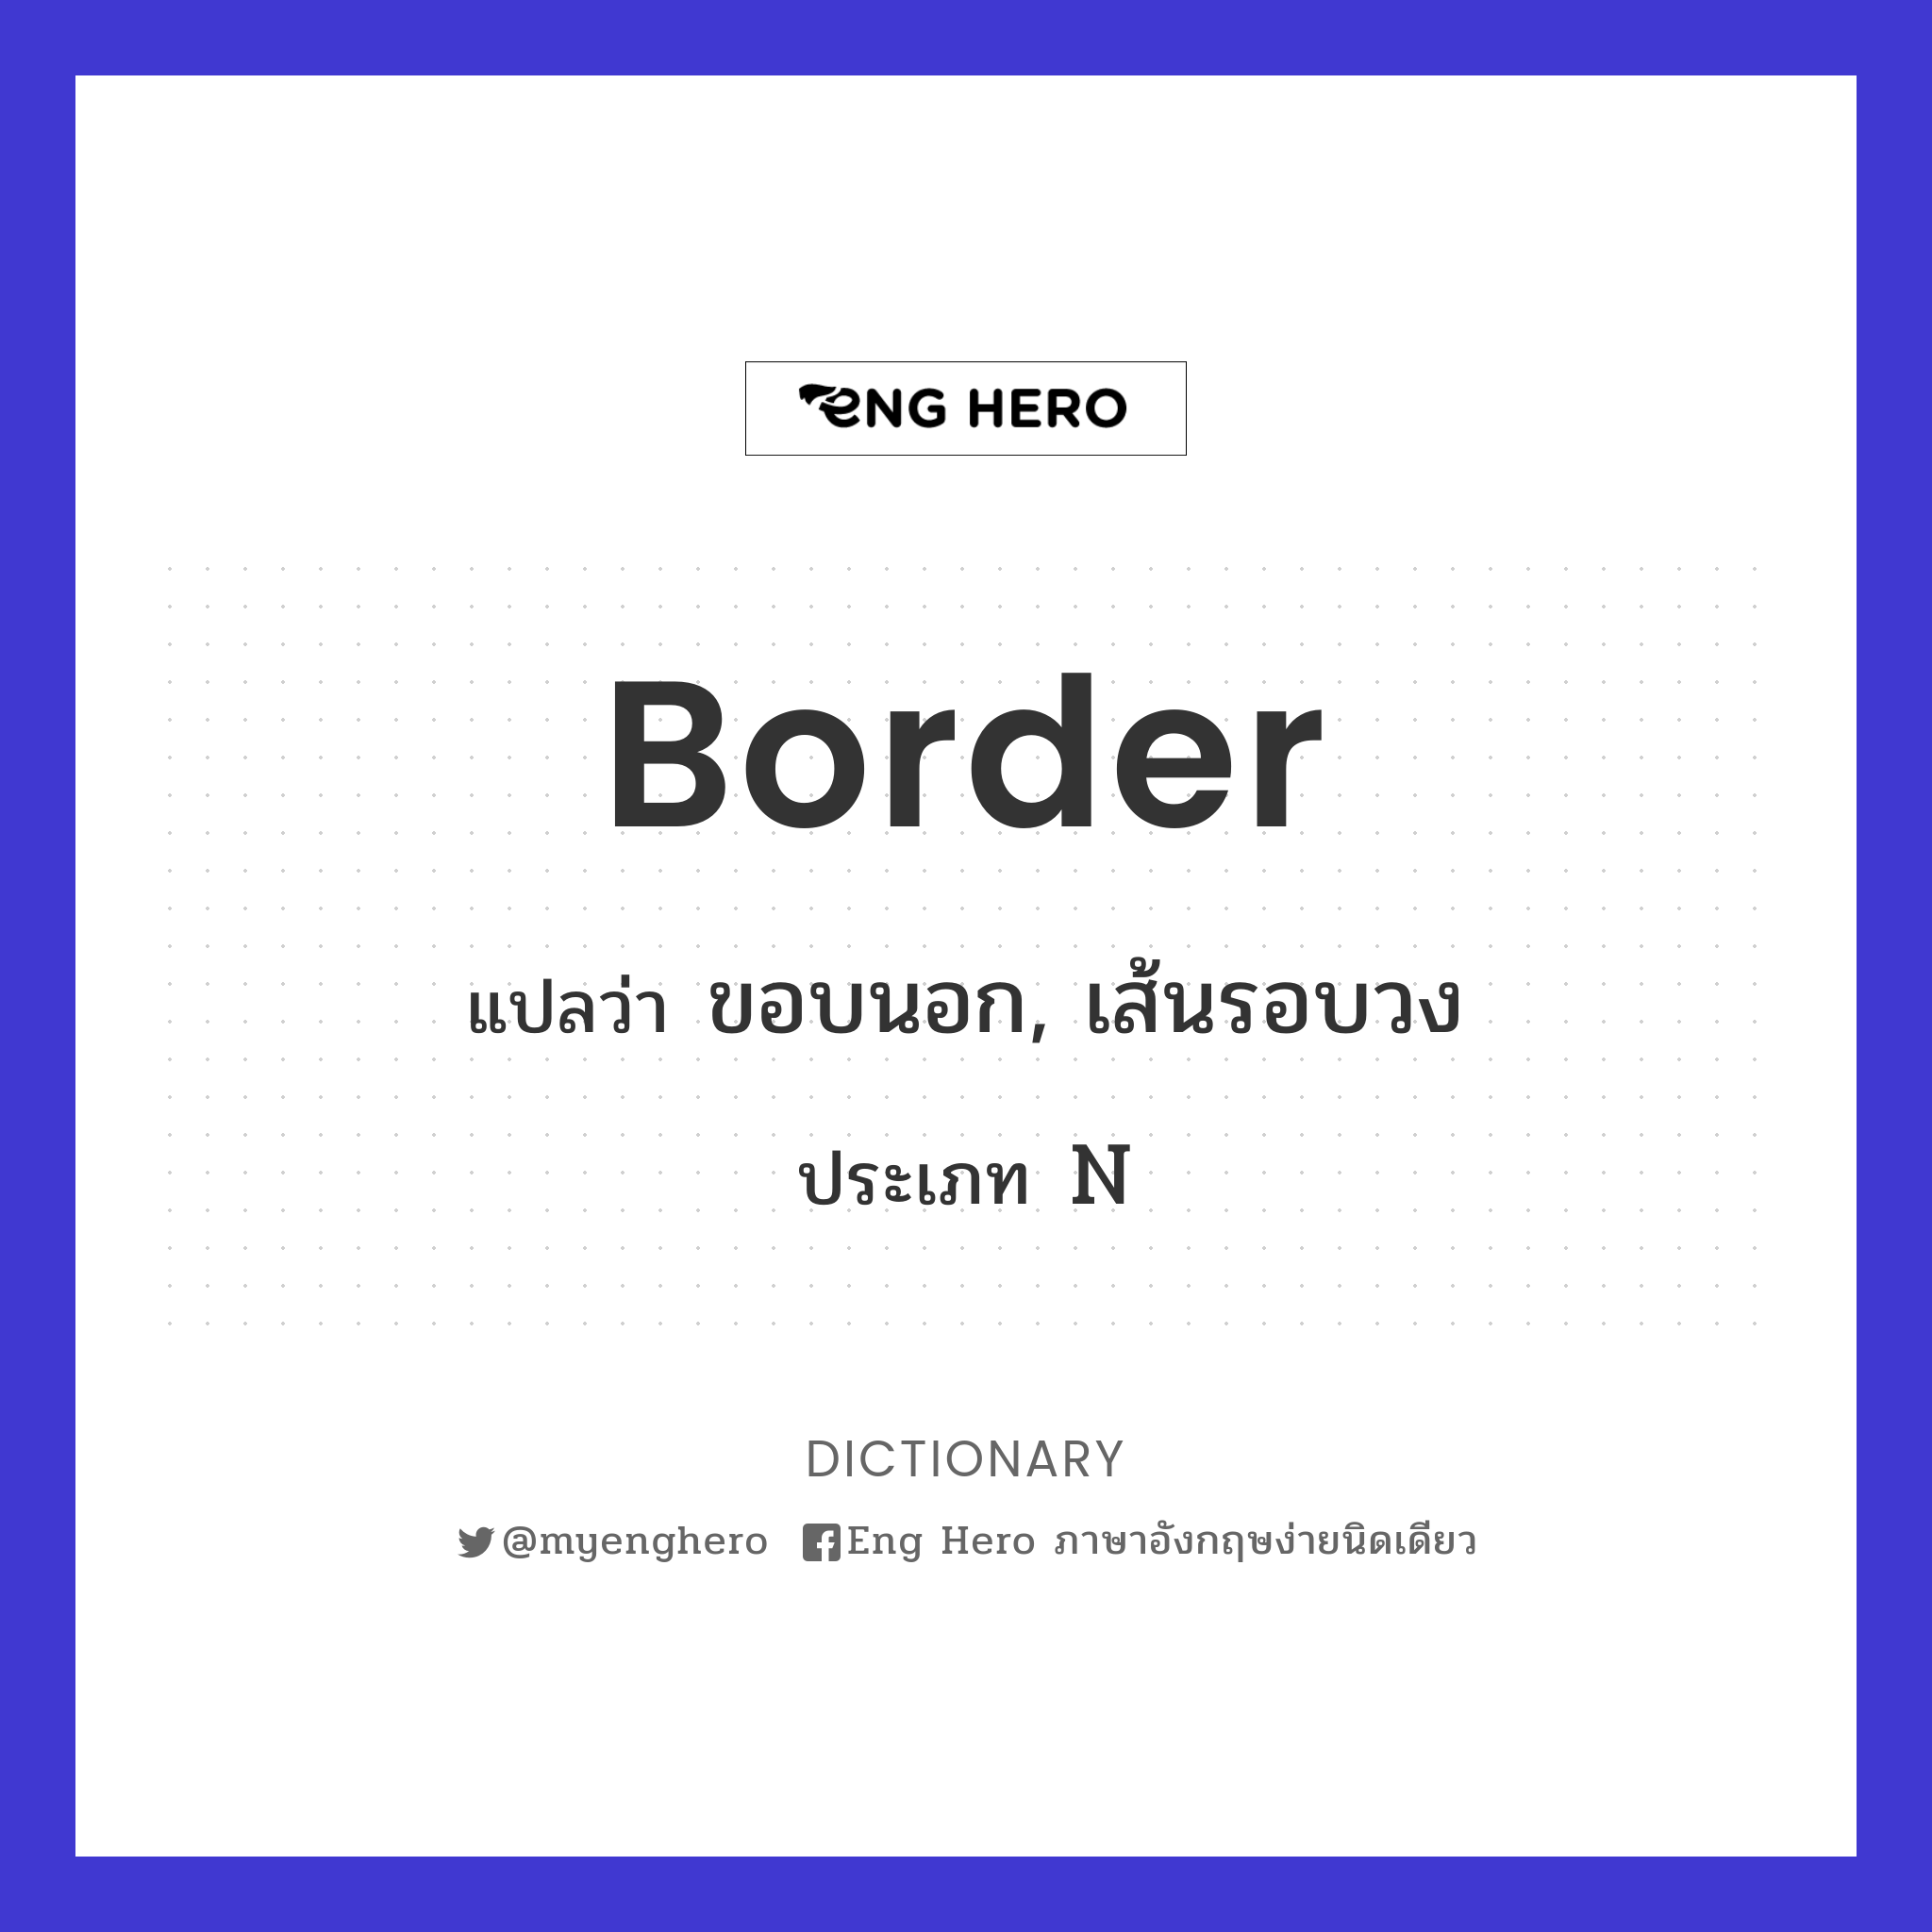 border